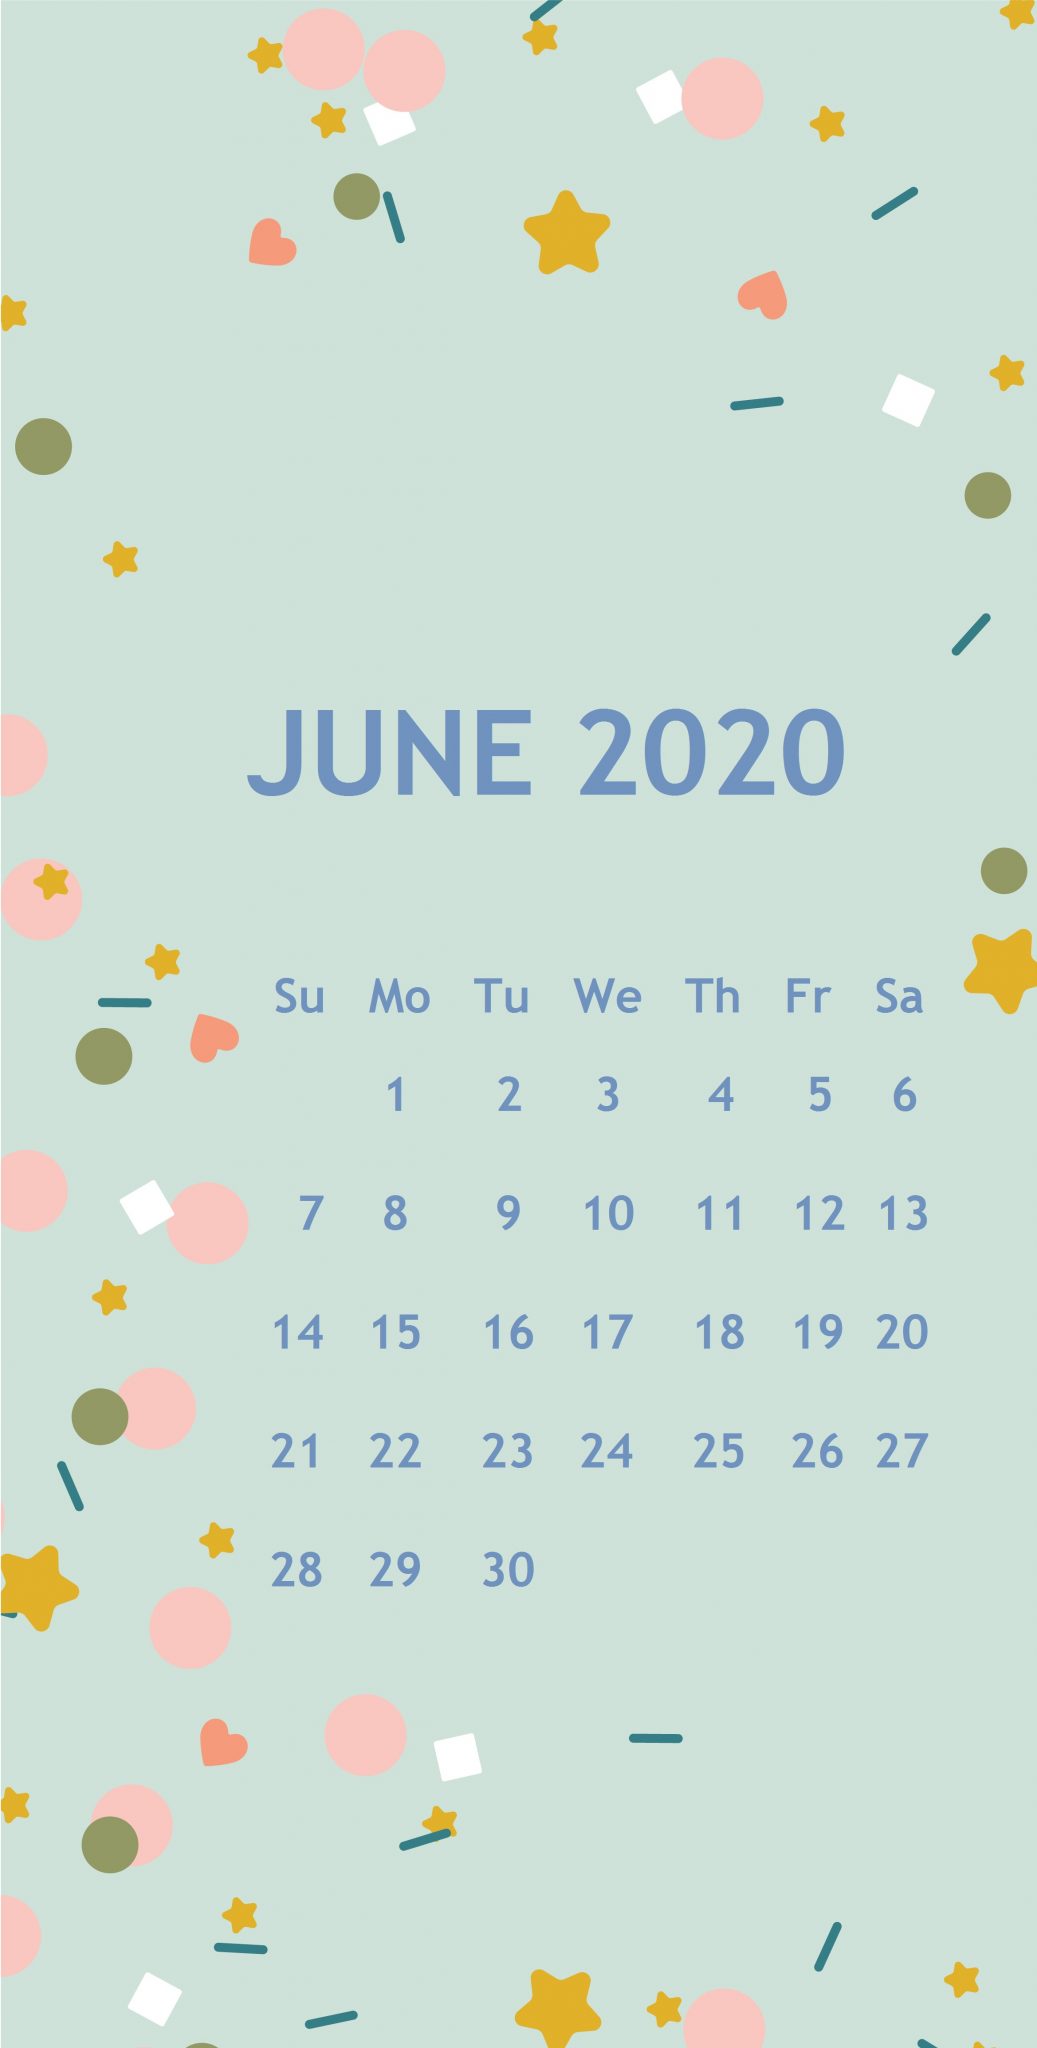 June 2020 iPhone Wallpaper